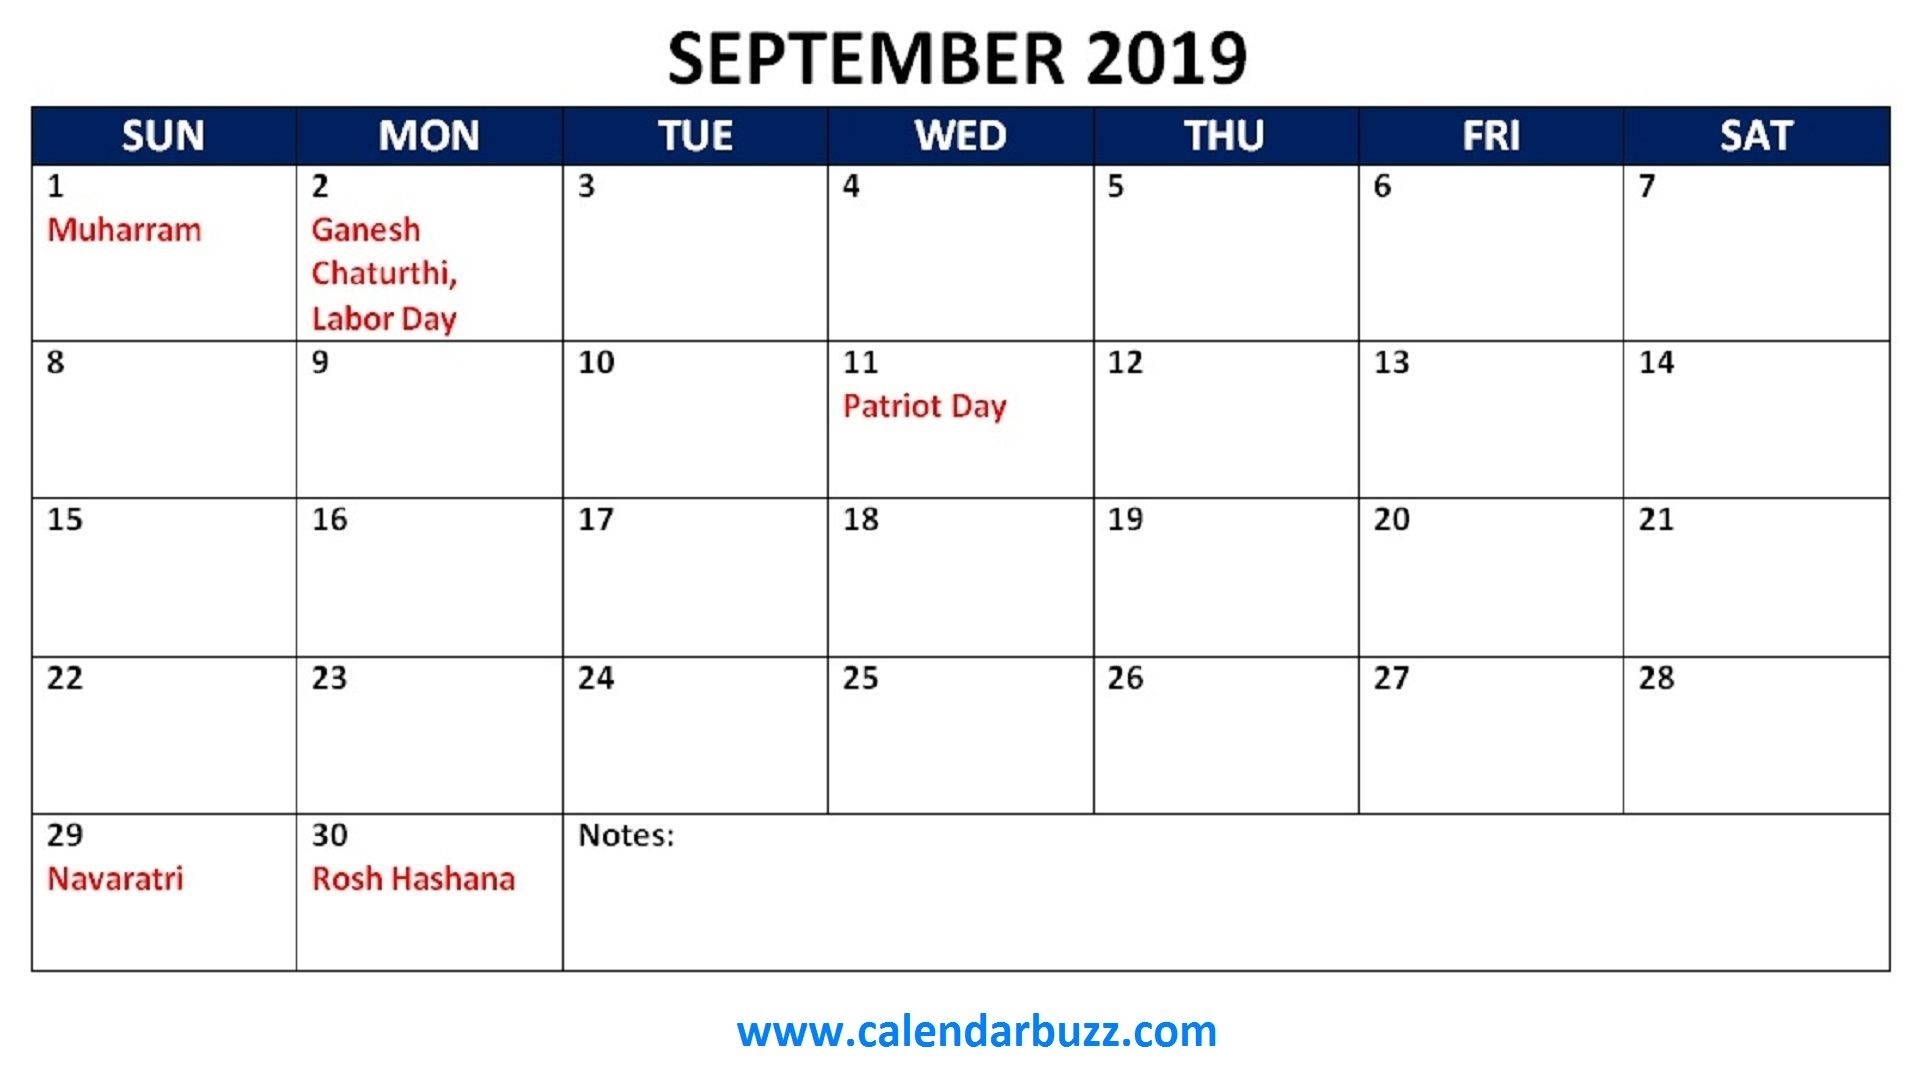 September 2019 Holidays Calendar Printable | 2019 Calendars Calendar Holidays For September